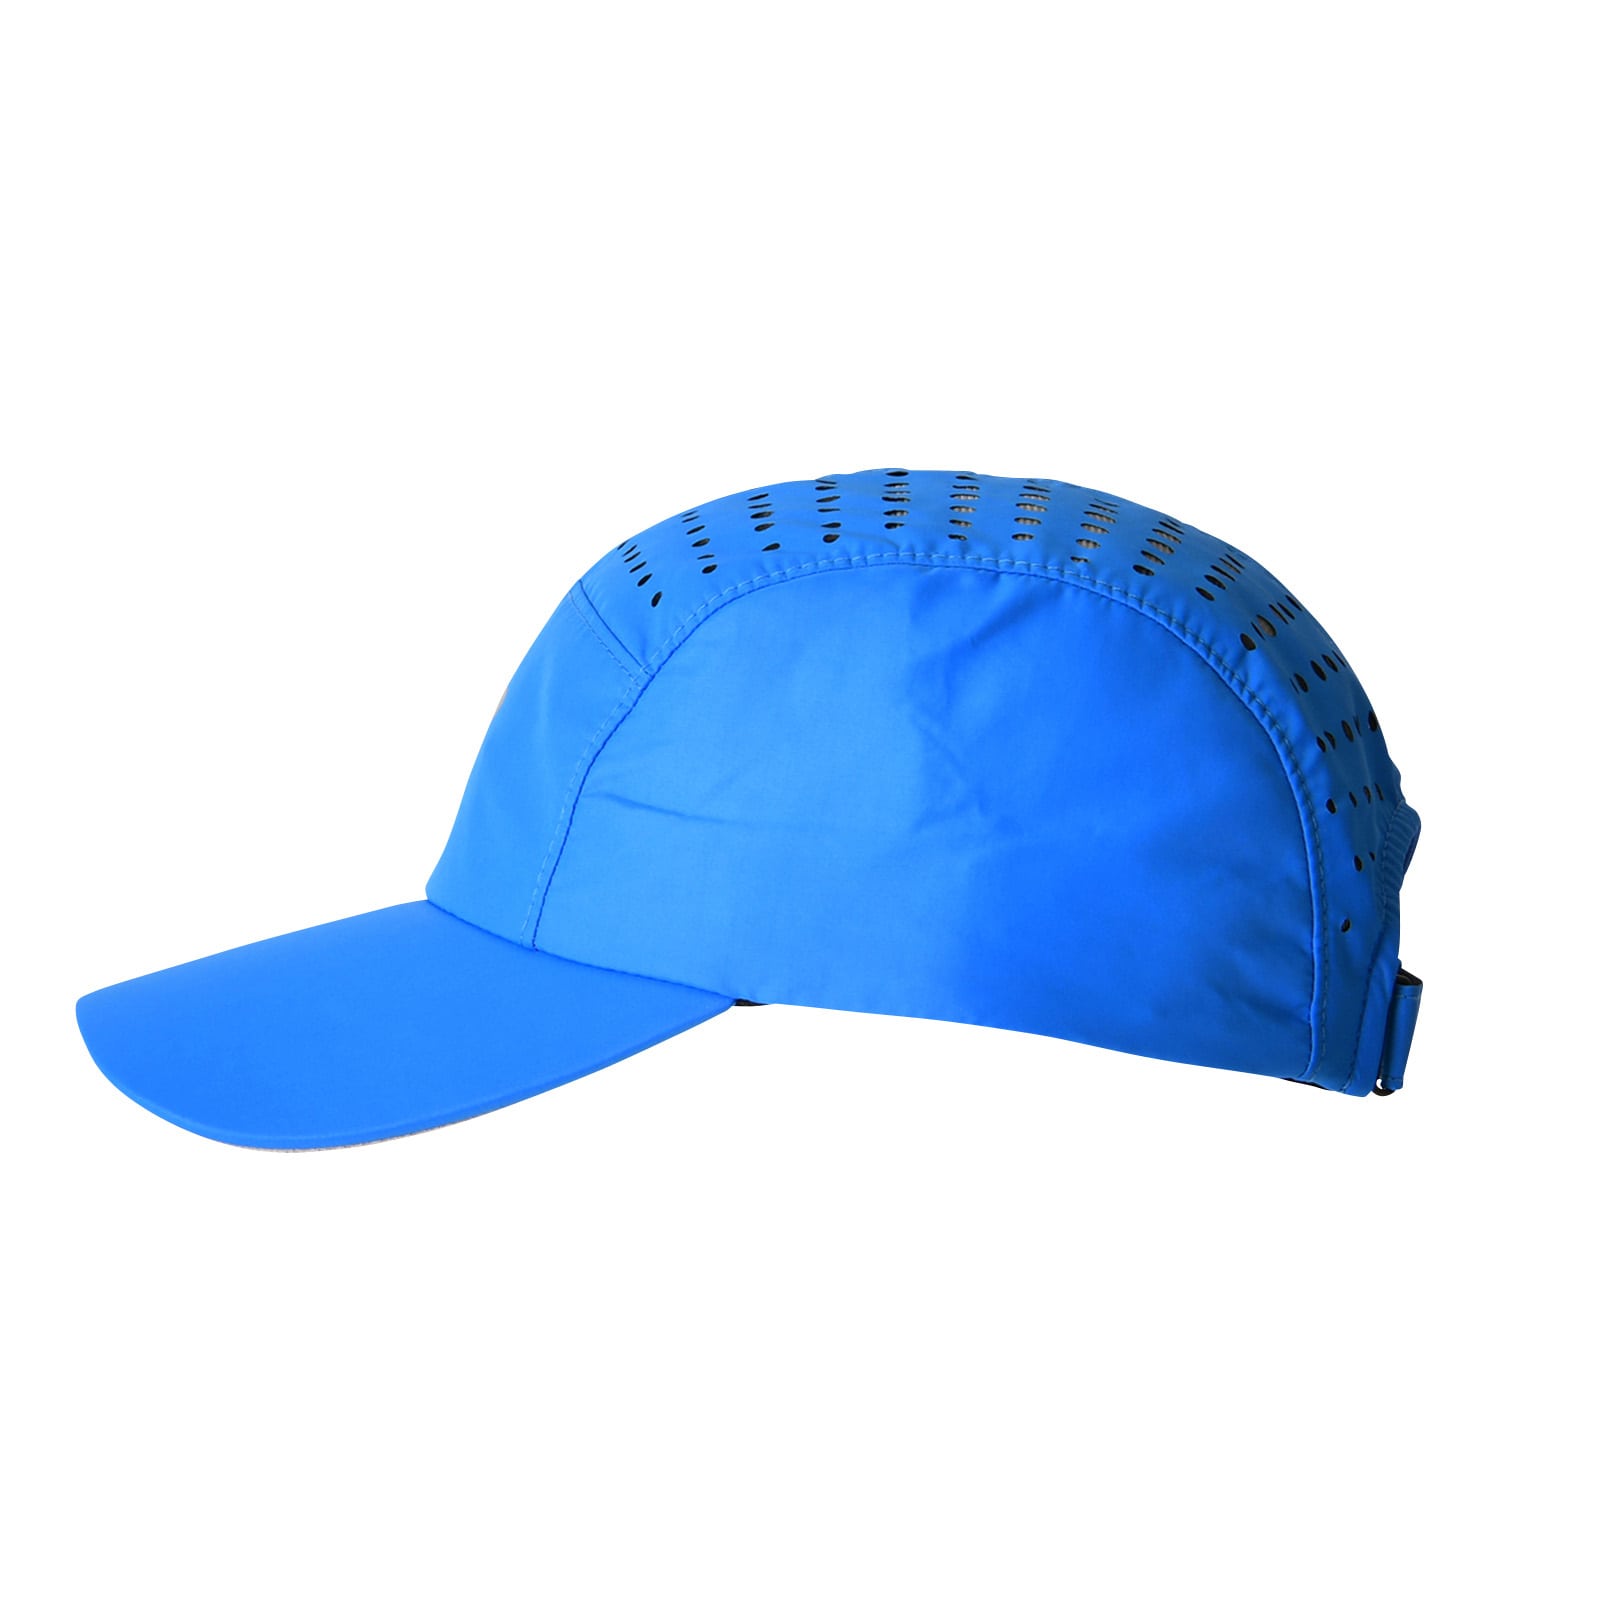 Impact Lightweight帽